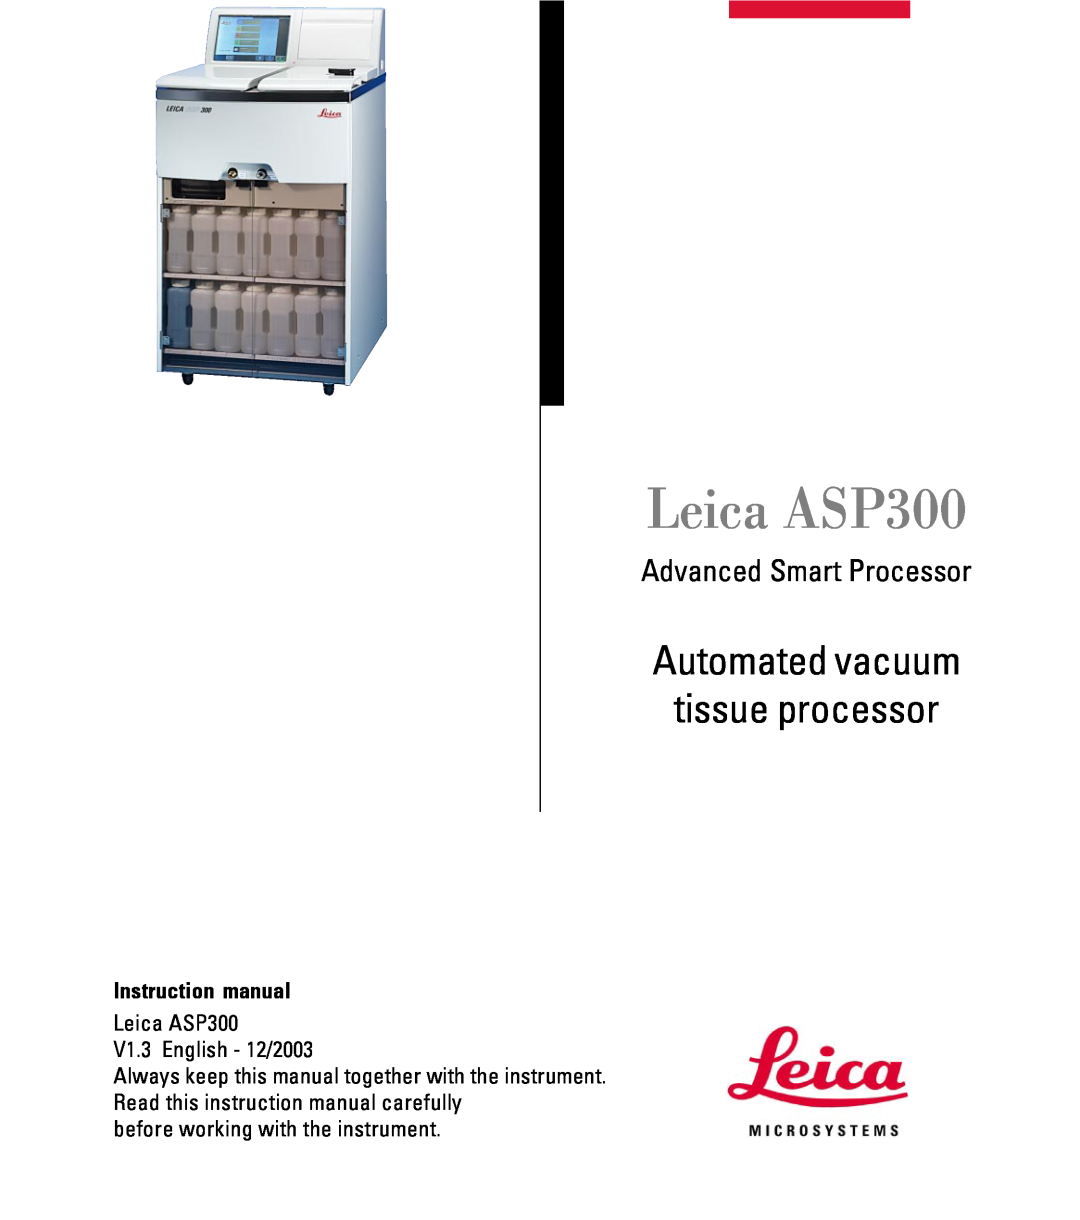 Leica instruction manual Leica ASP300, Automated vacuum tissue processor, Advanced Smart Processor 